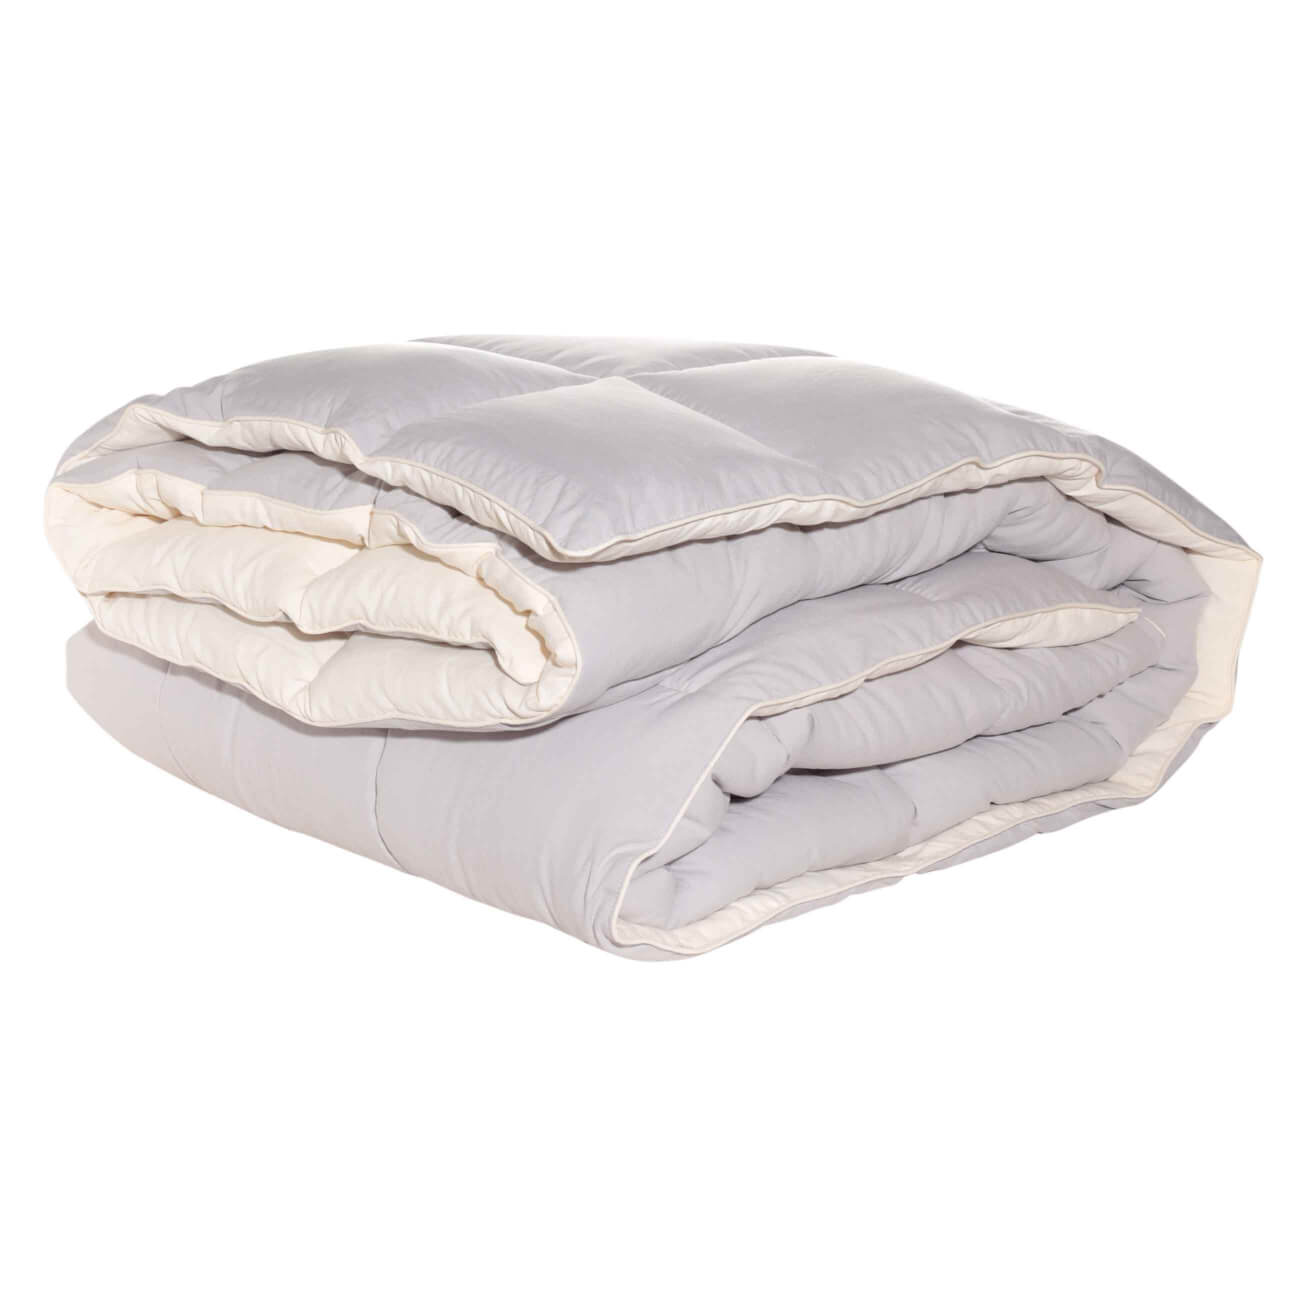 Одеяло, 140х200 см, микрофибра/холлофайбер, бежевое/молочное, Hollow fiber